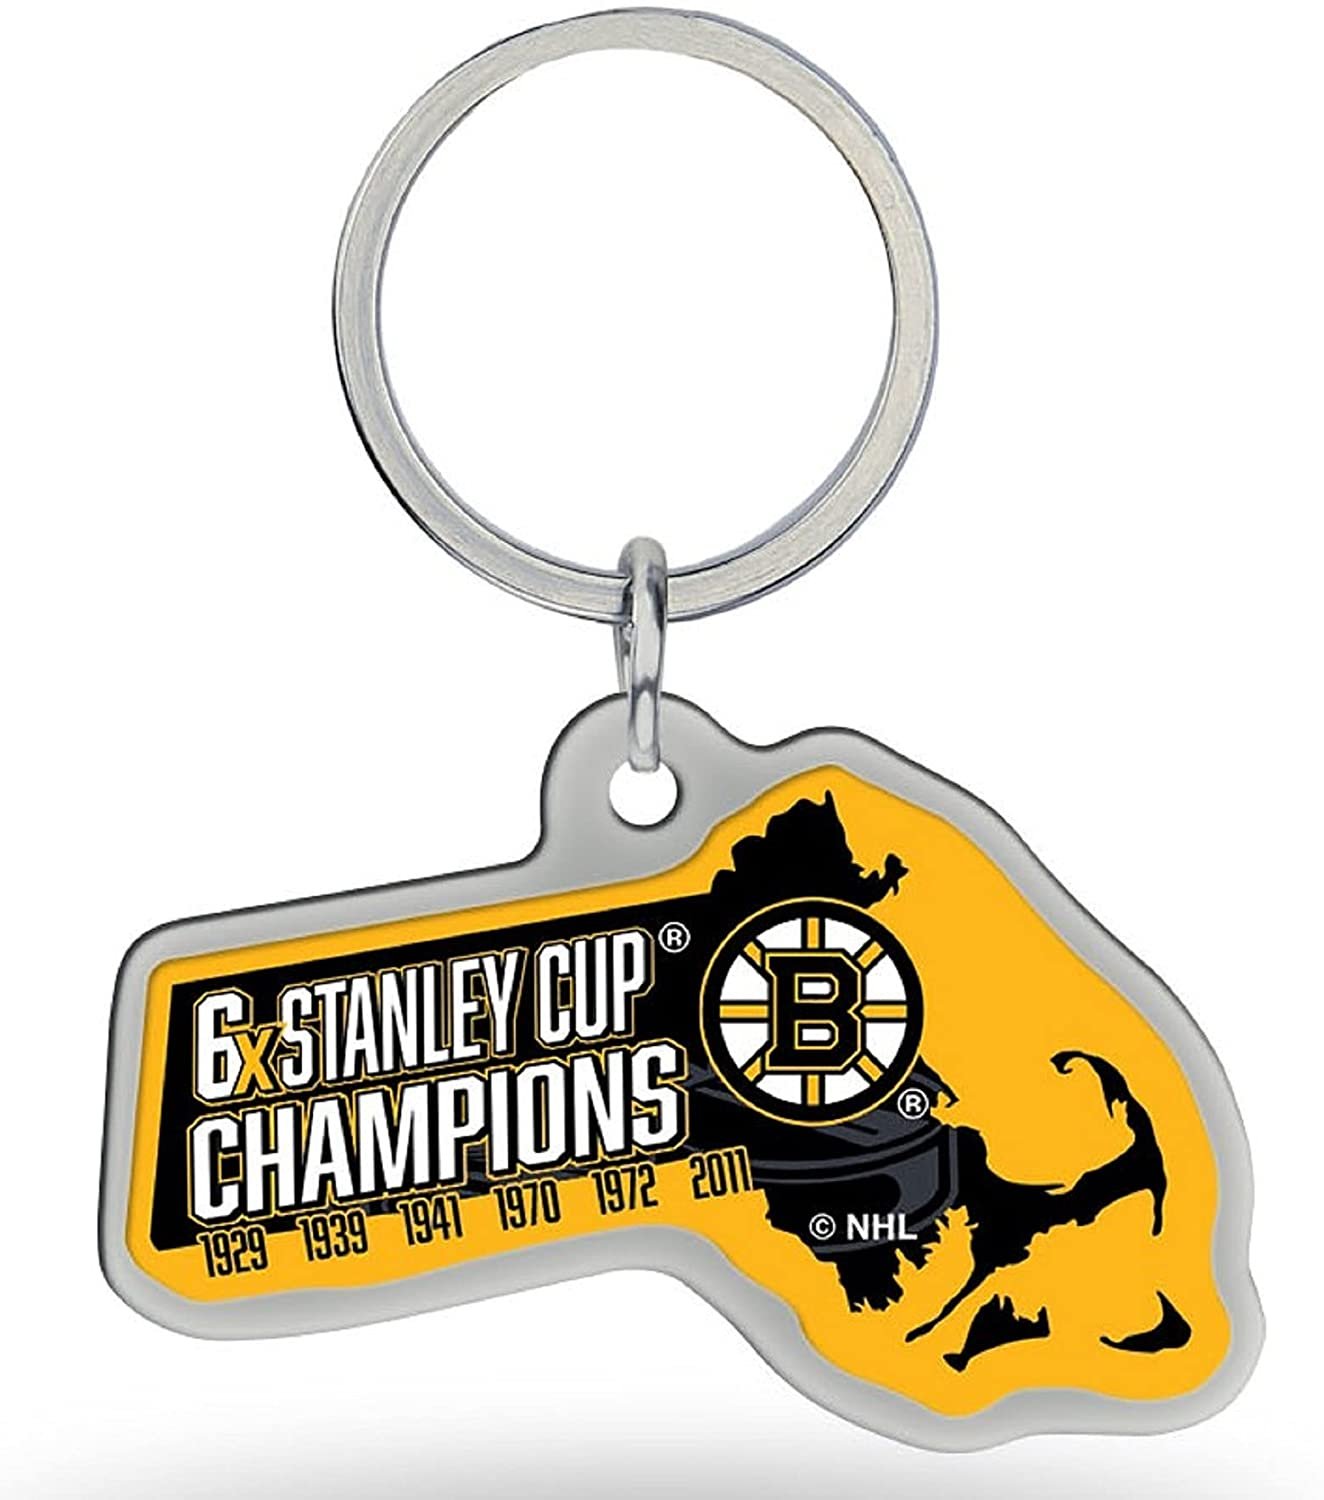 Boston Bruins Keychain 6-Time Champions Home State Shape Premium Metal Decal Emblem Hockey